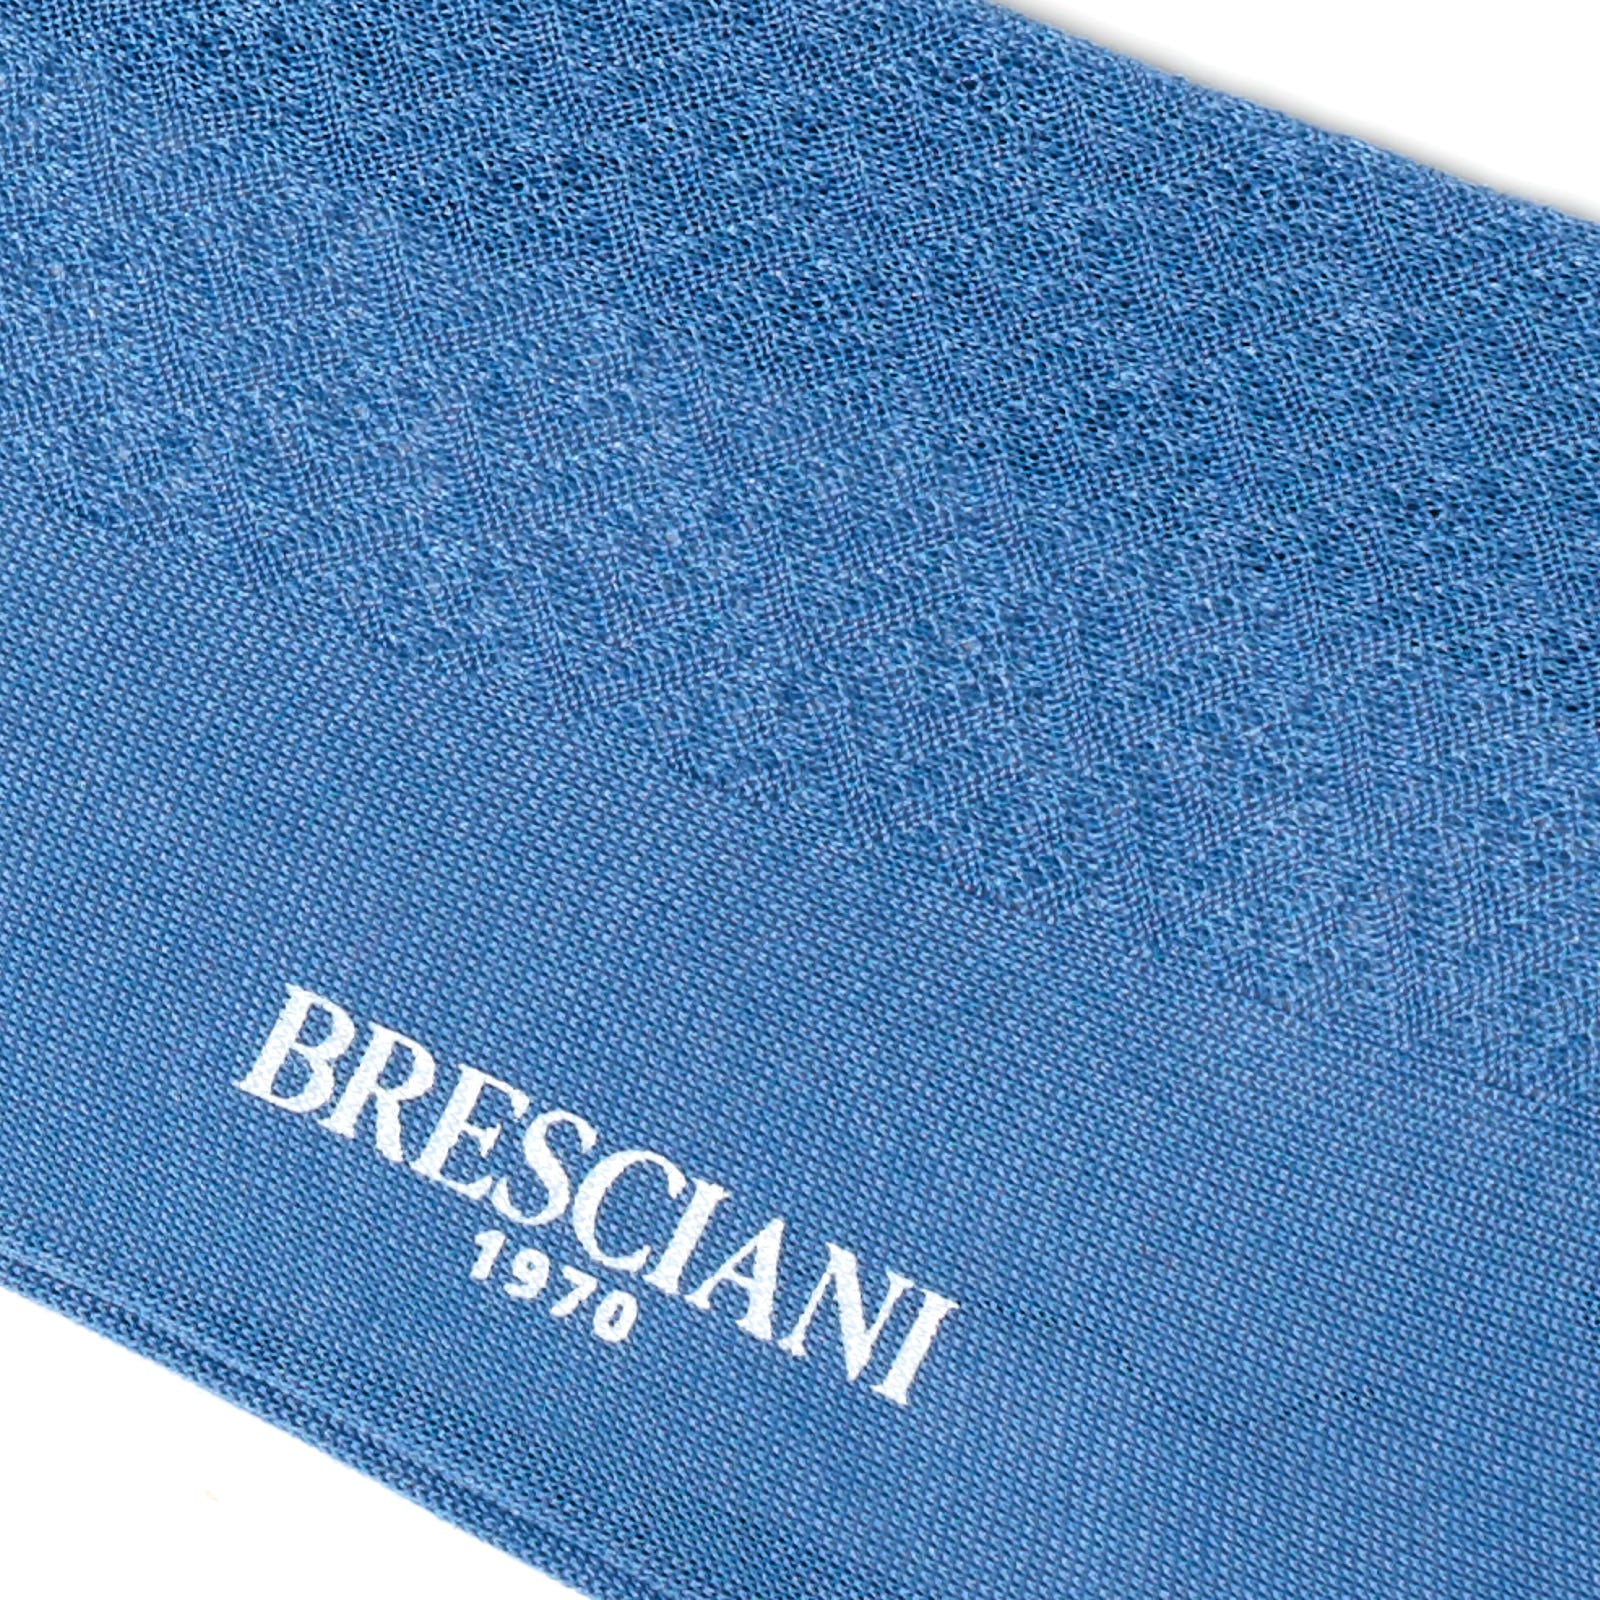 BRESCIANI Cotton Herringbone Mid Calf Length Socks US M-L BRESCIANI